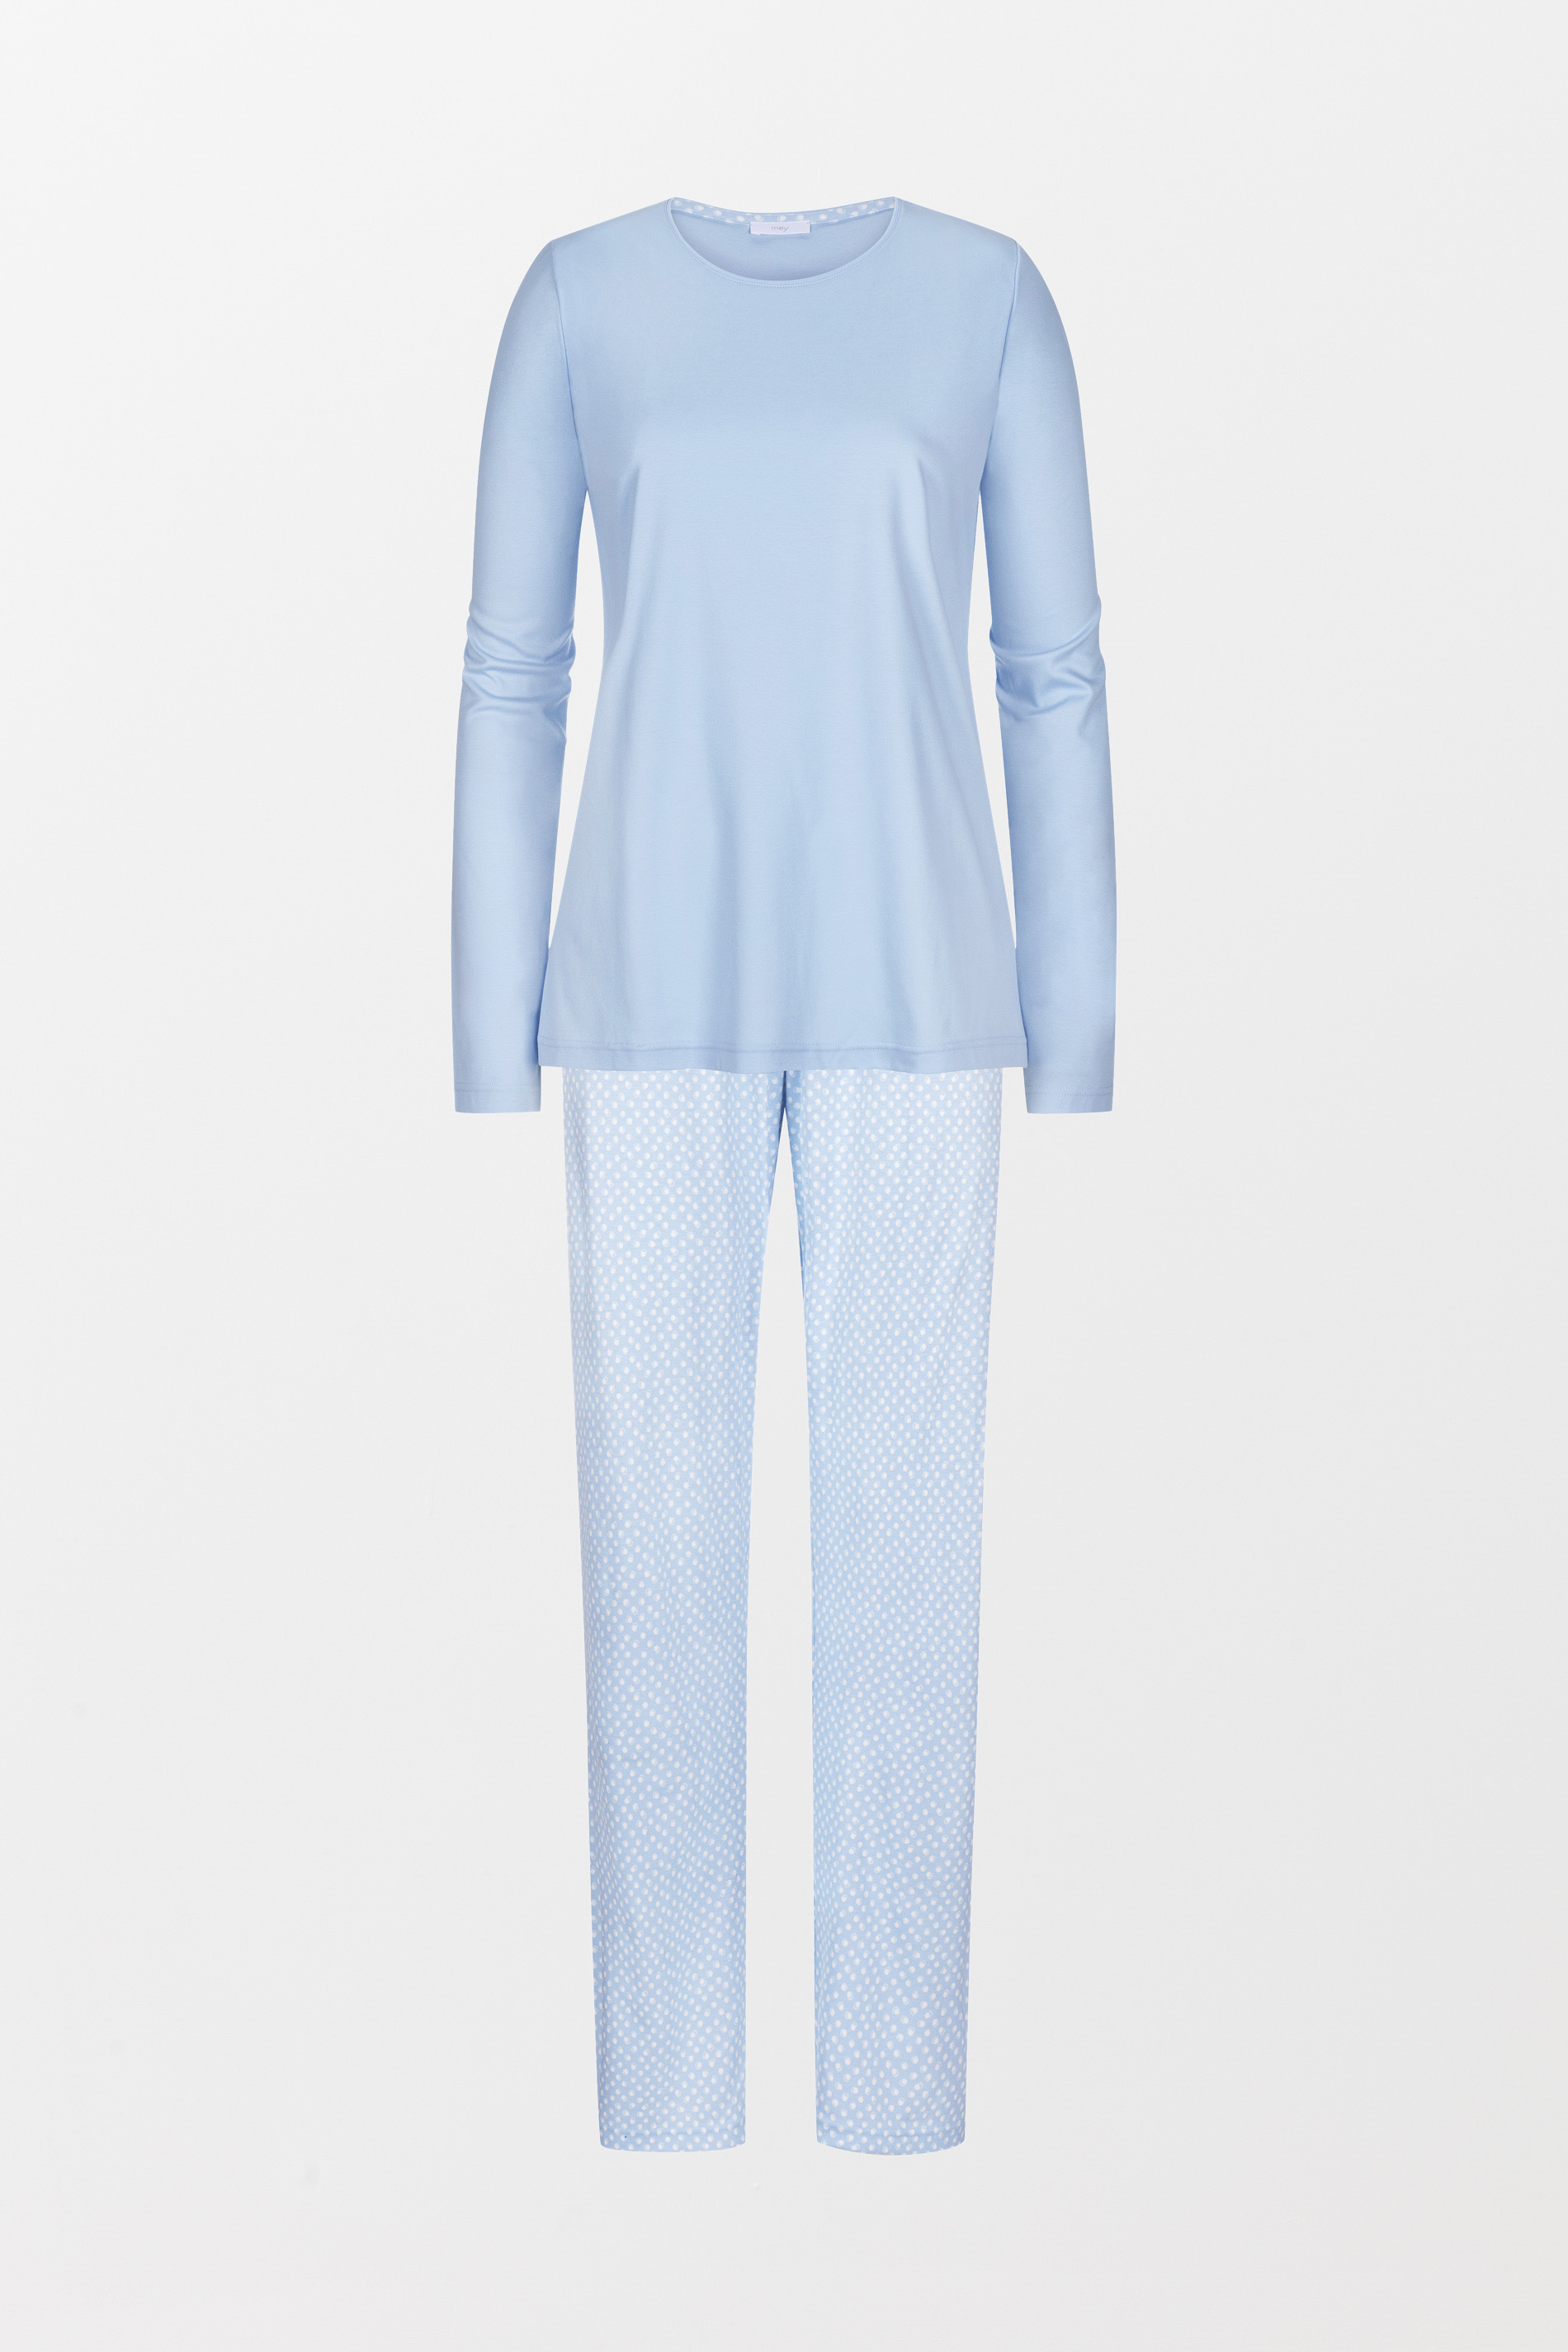 Pyjamas Dream Blue Serie Emelie Cut Out | mey®